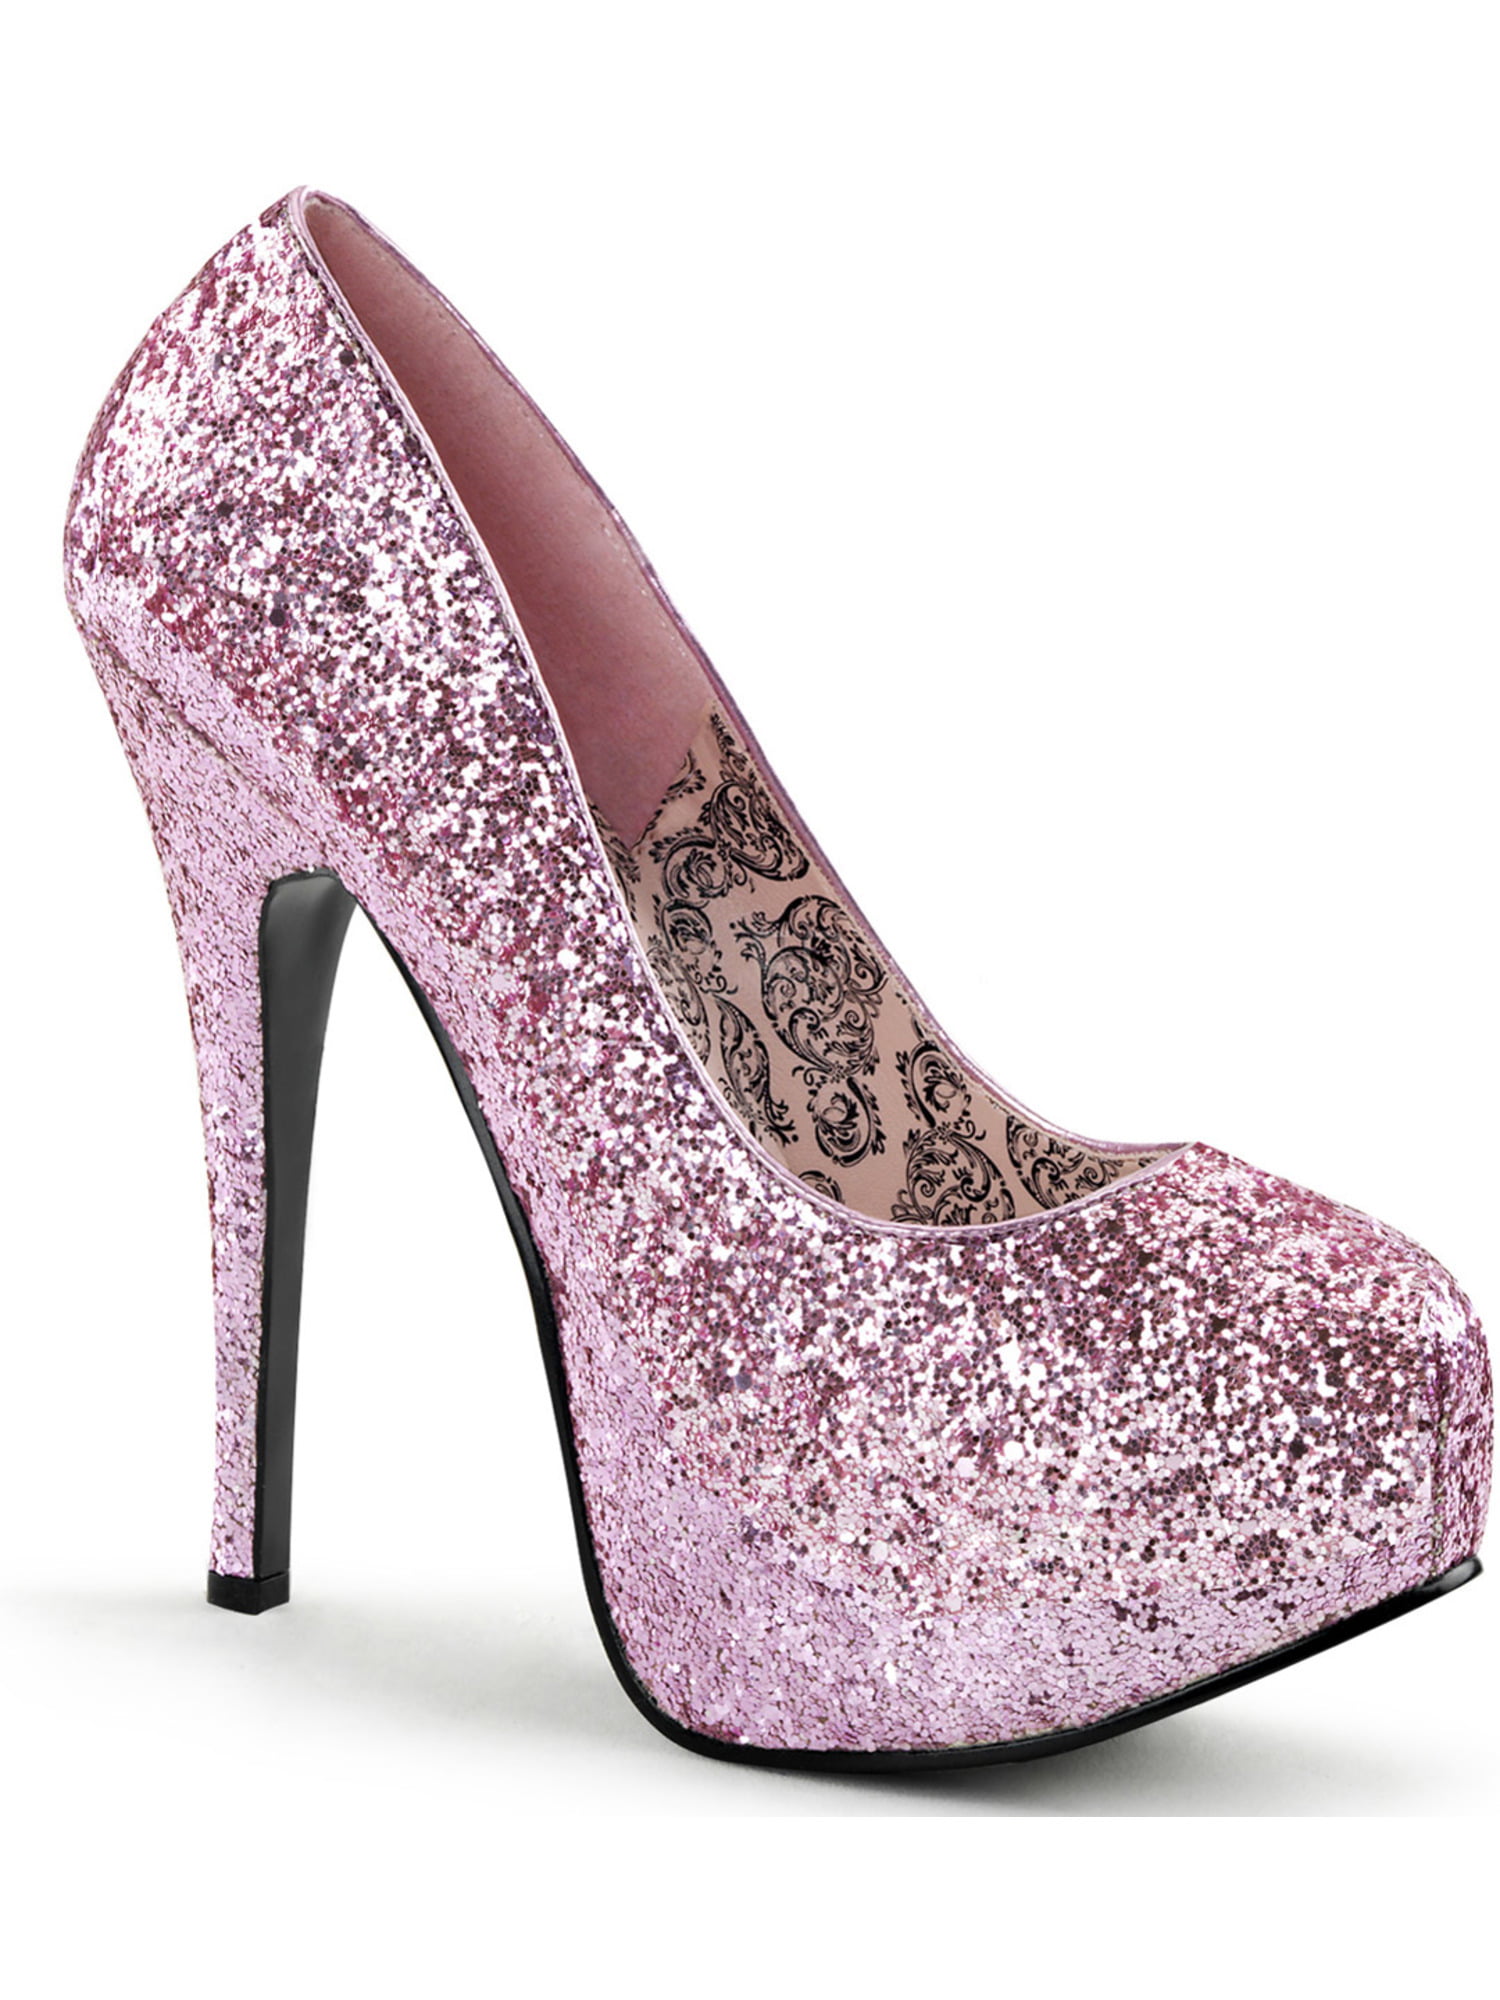 pink sparkly high heels